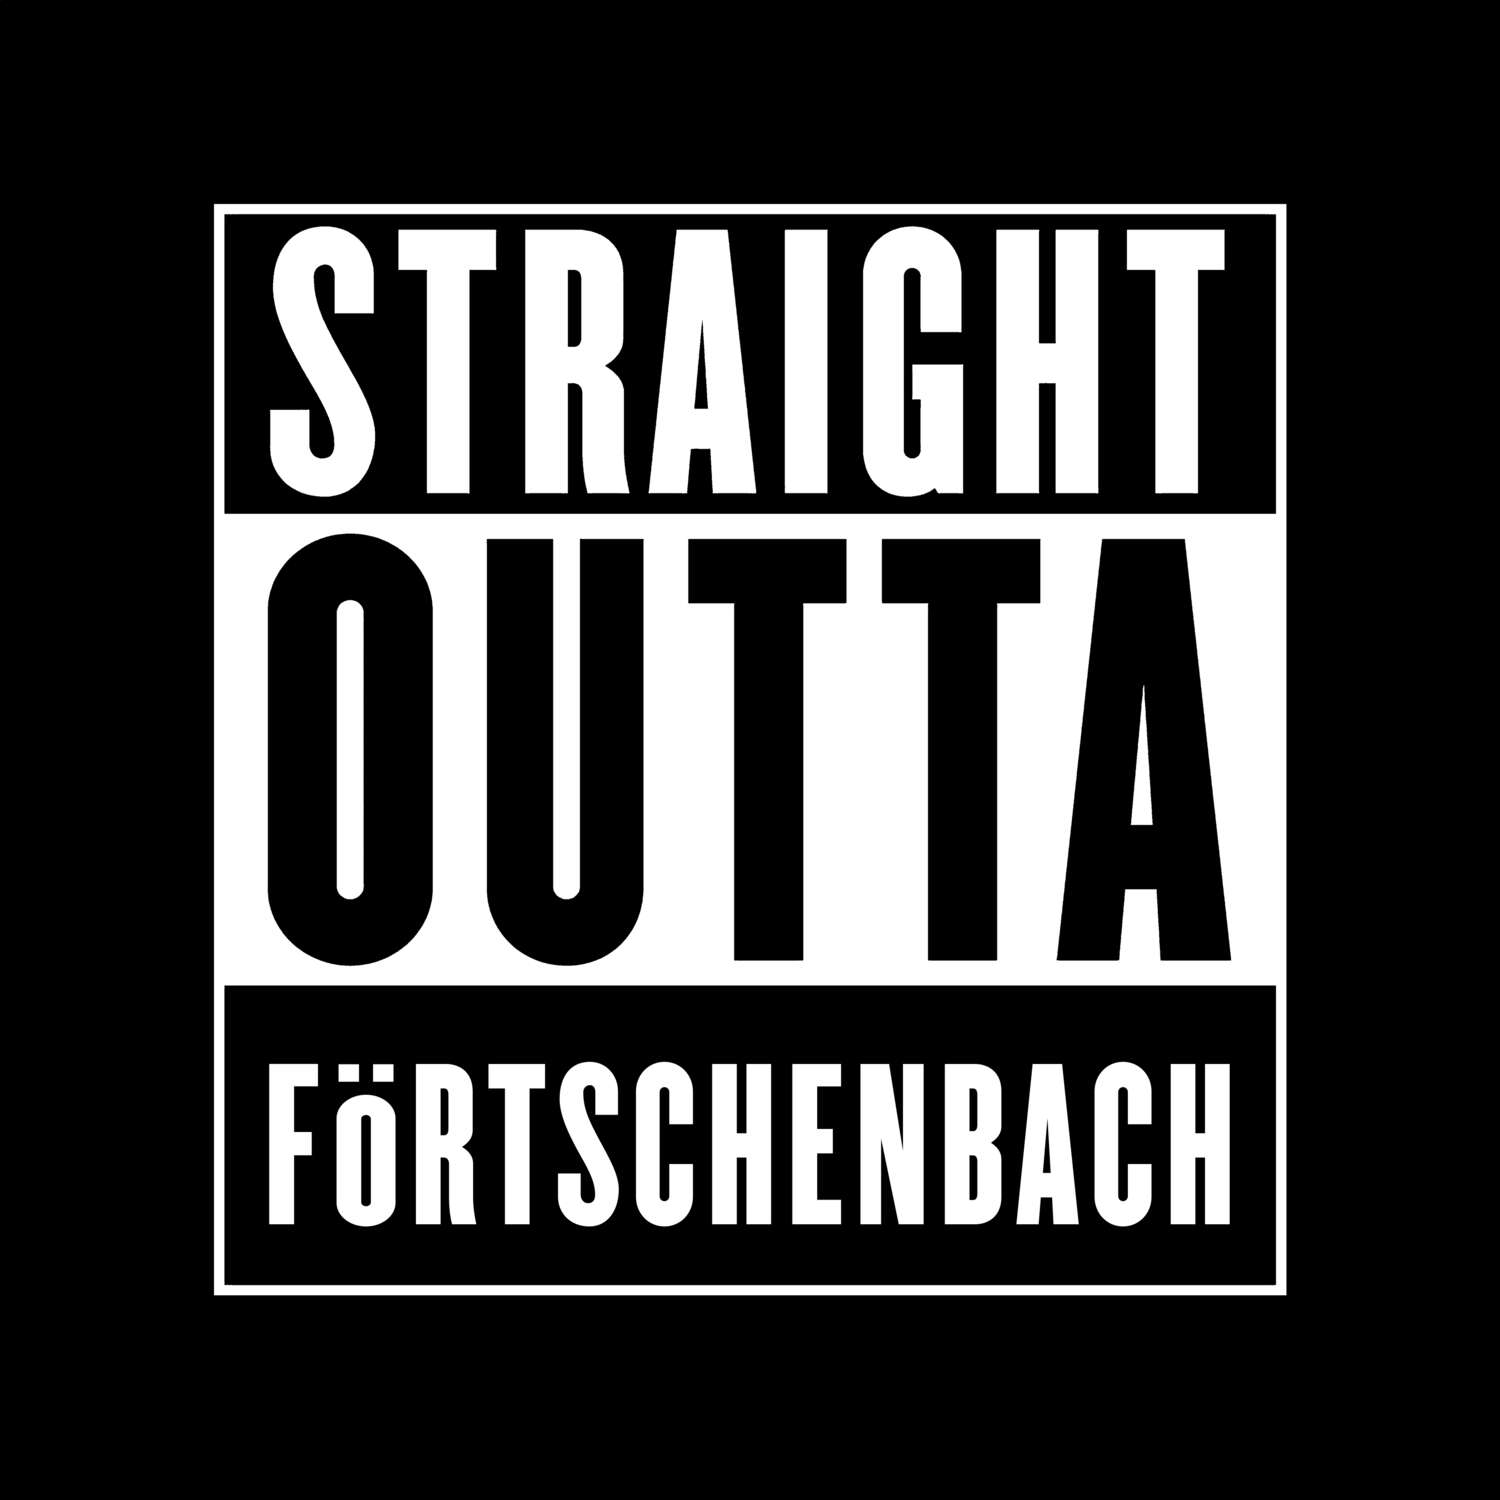 Förtschenbach T-Shirt »Straight Outta«